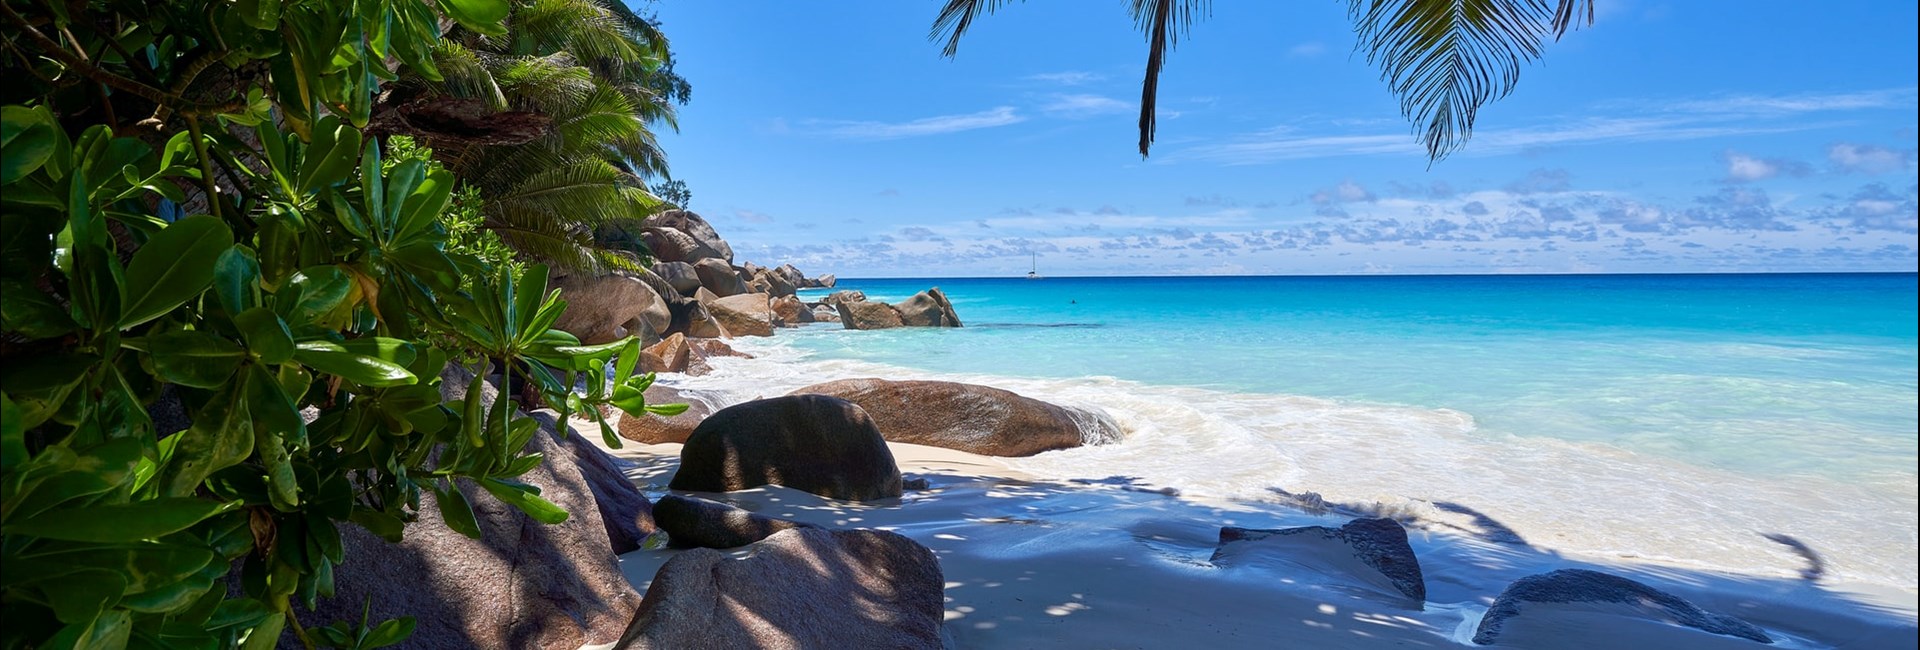 Large rocks on a tropical white sand beach 